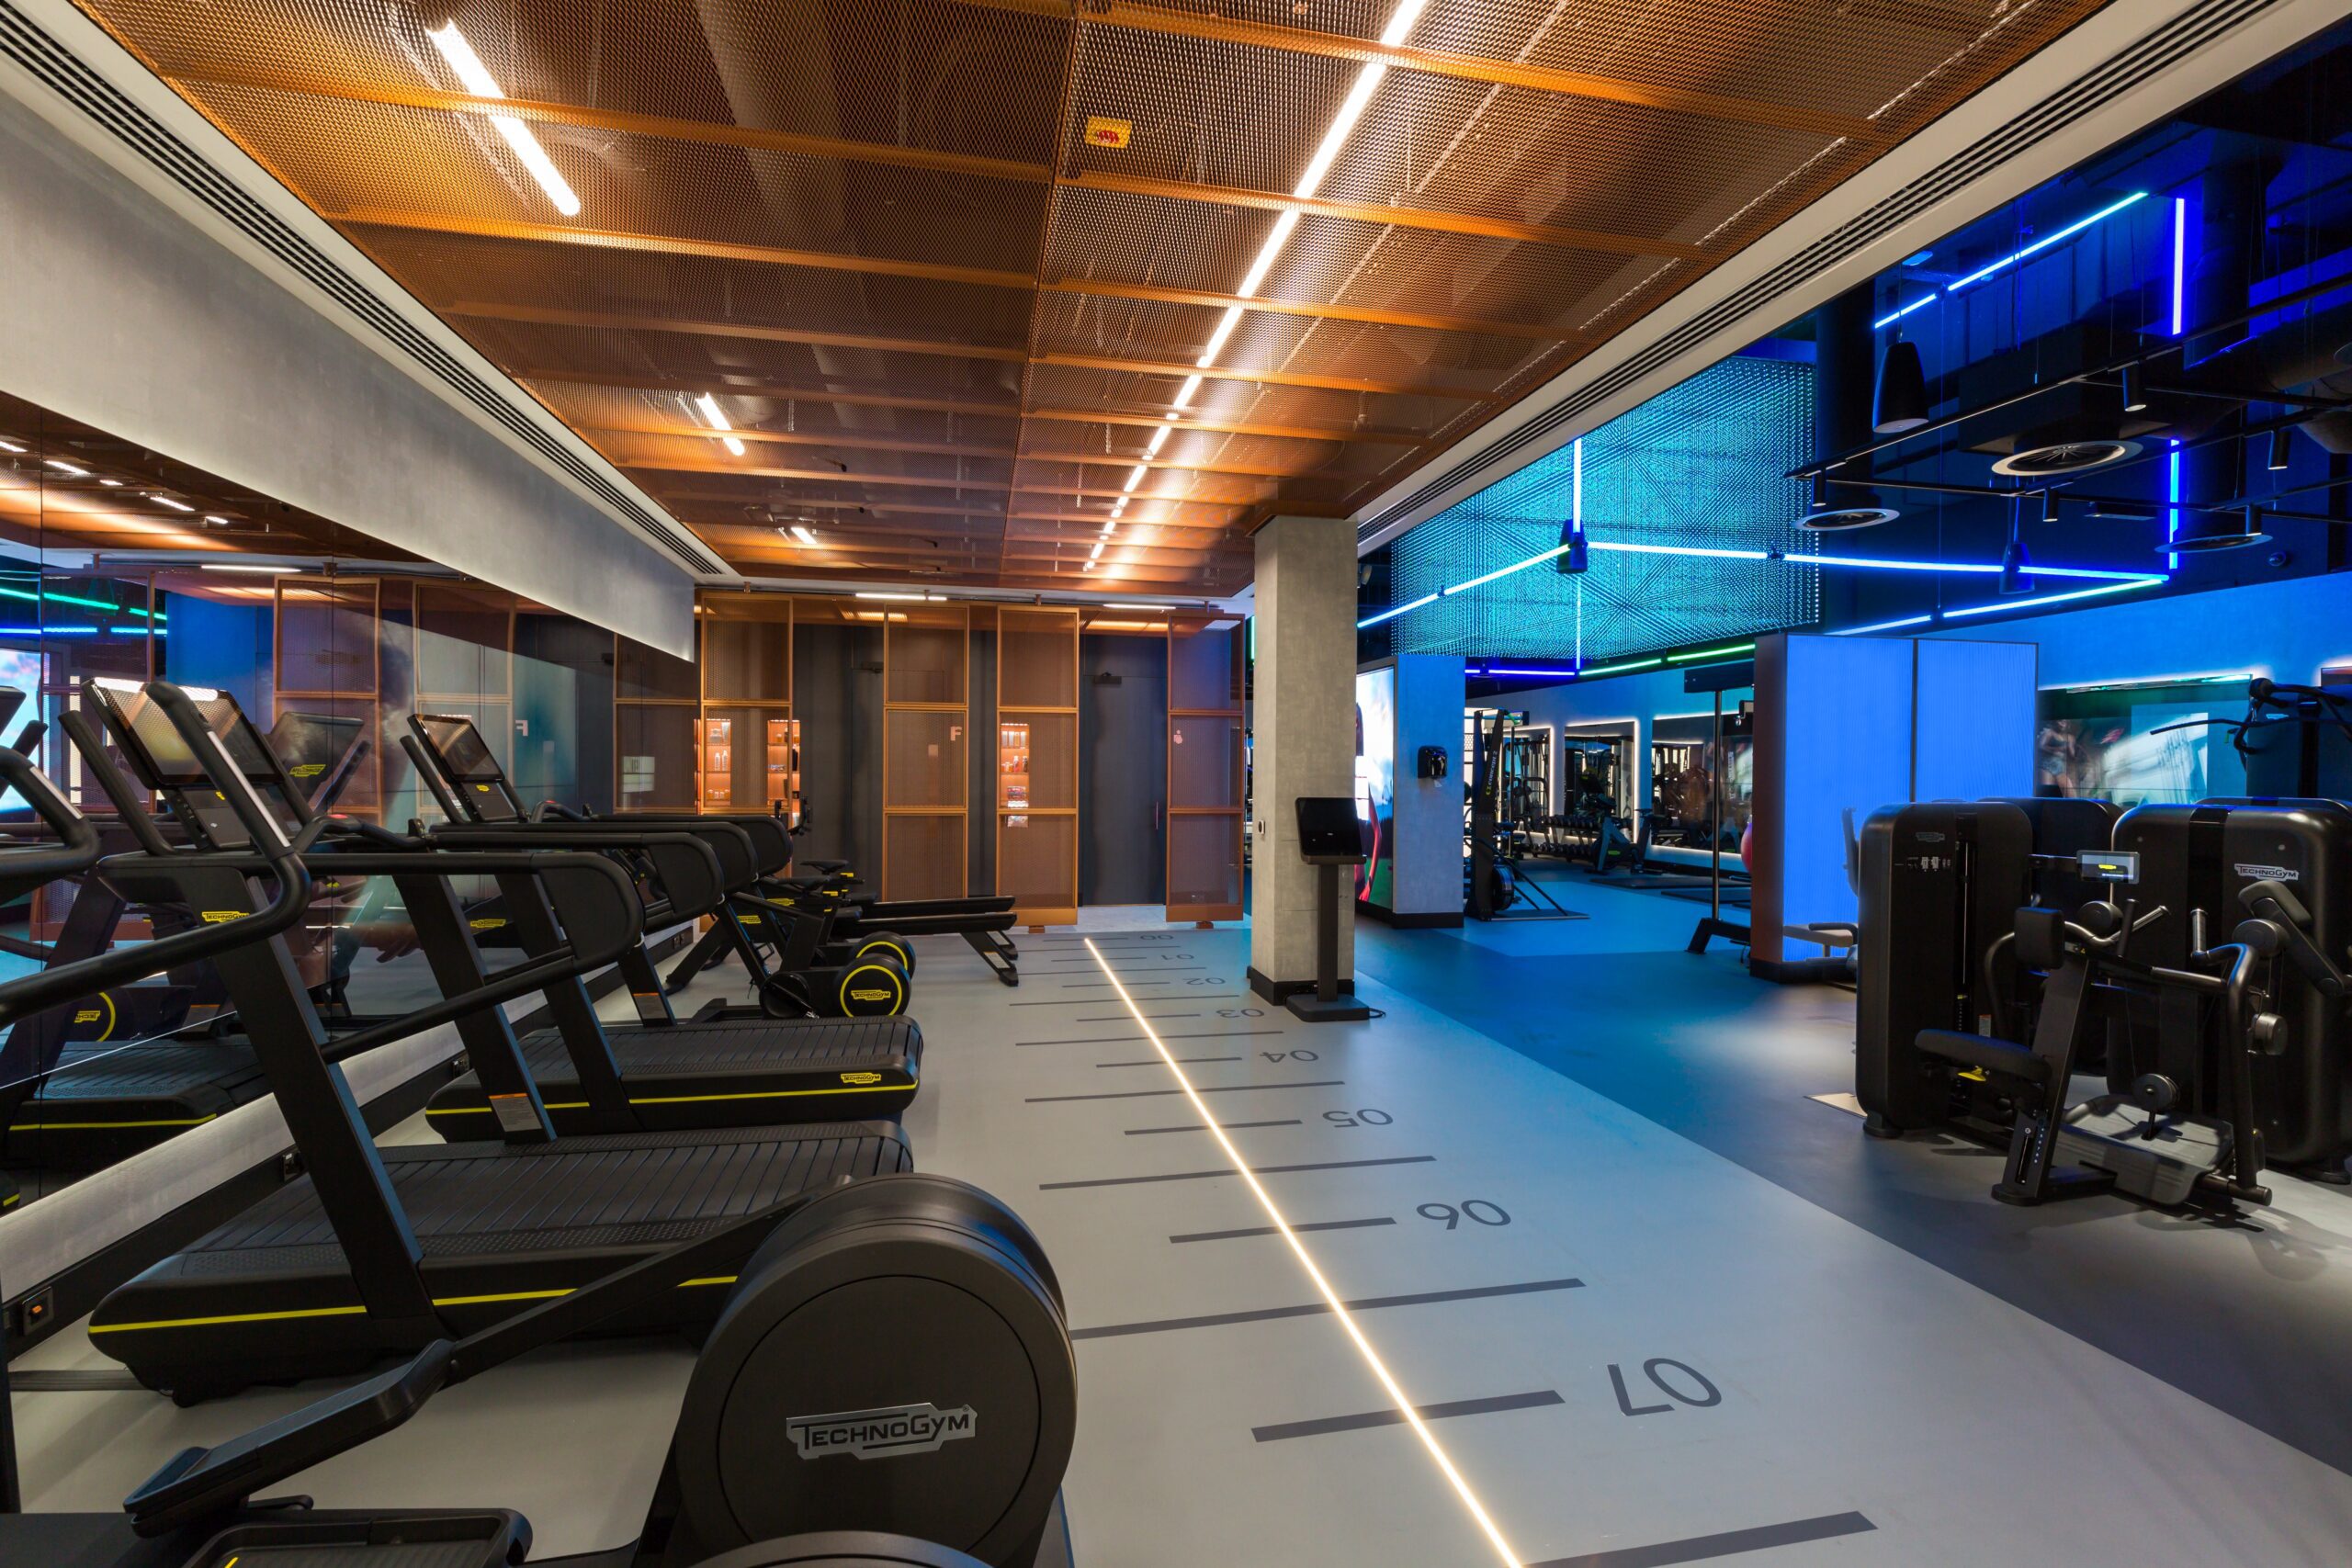 Gym design with technogym equipment and LED lighting